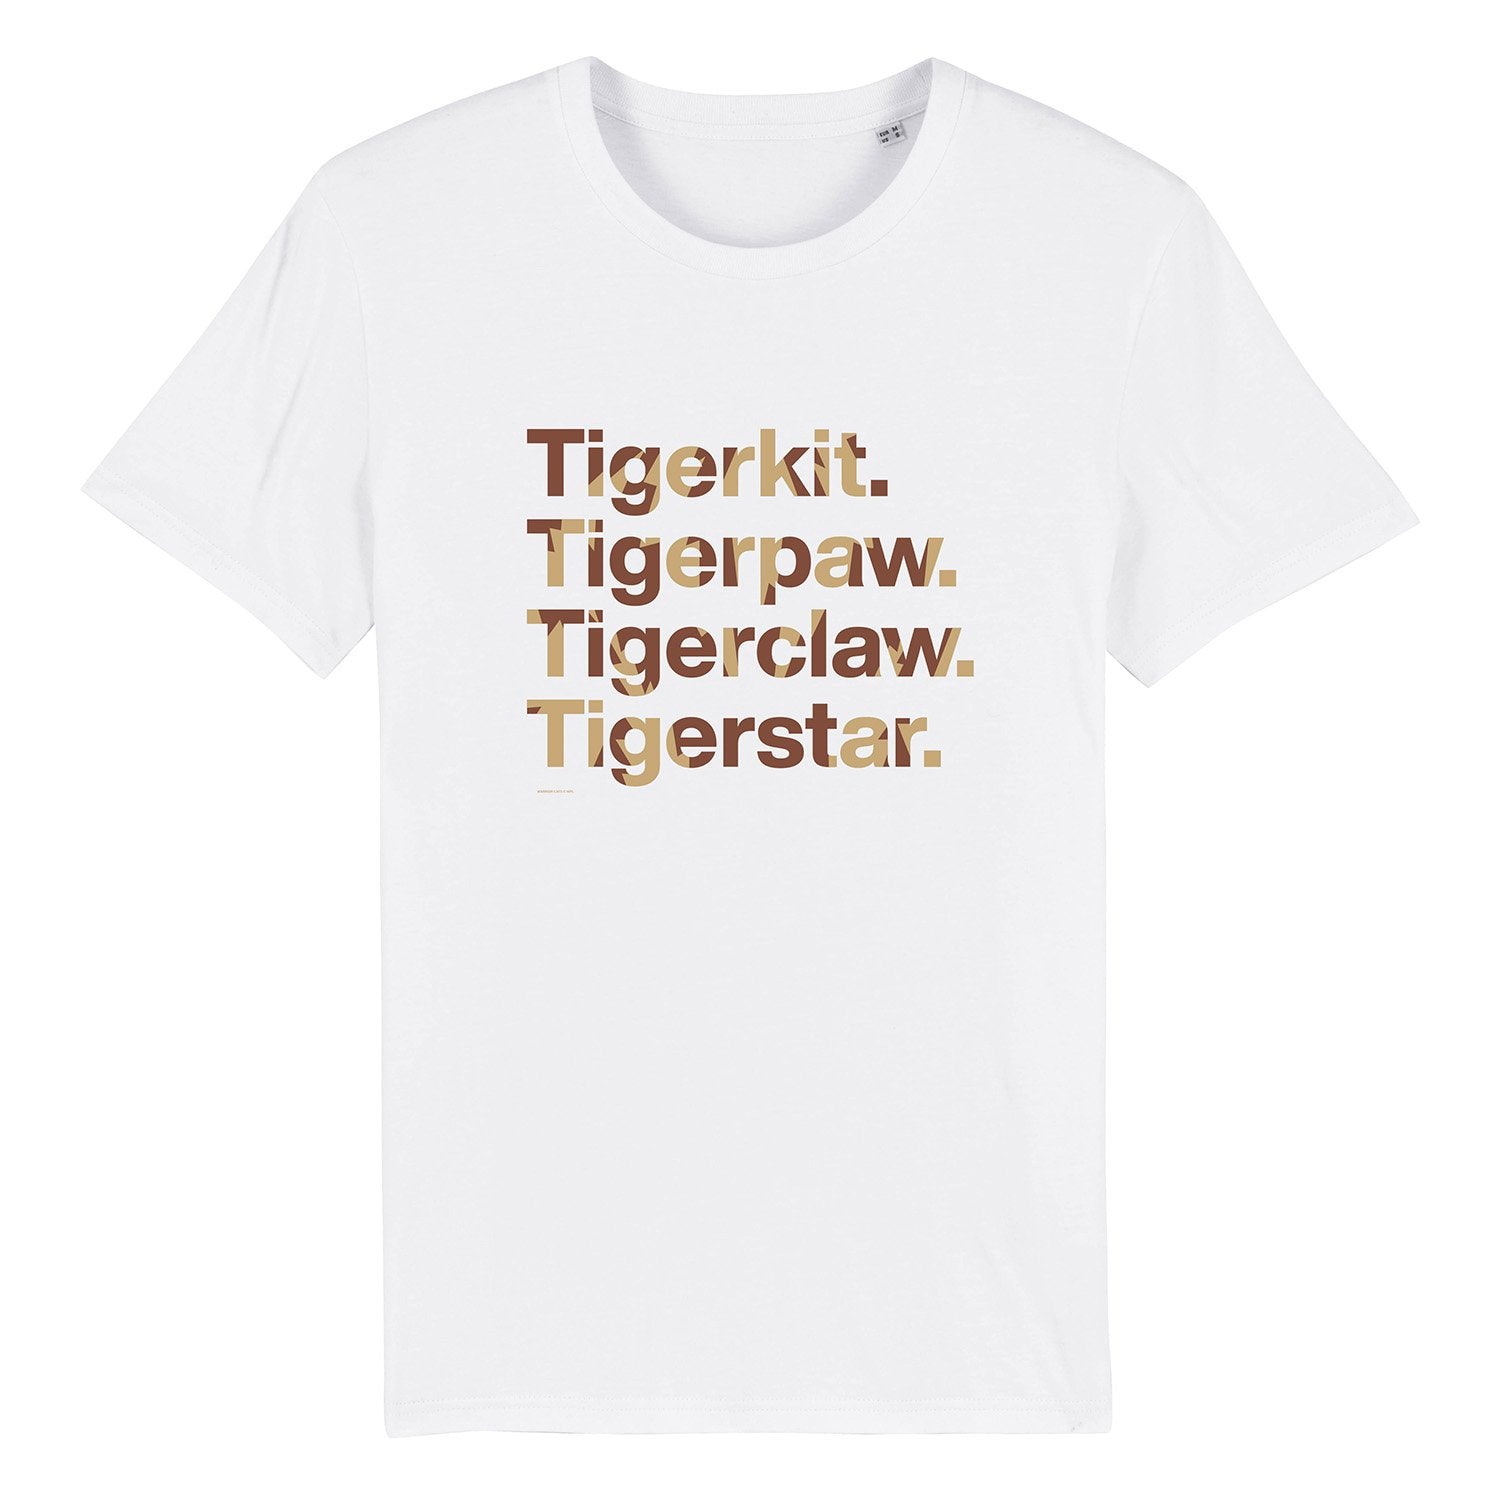 Character Names - Tigerstar - Adult Unisex T-Shirt